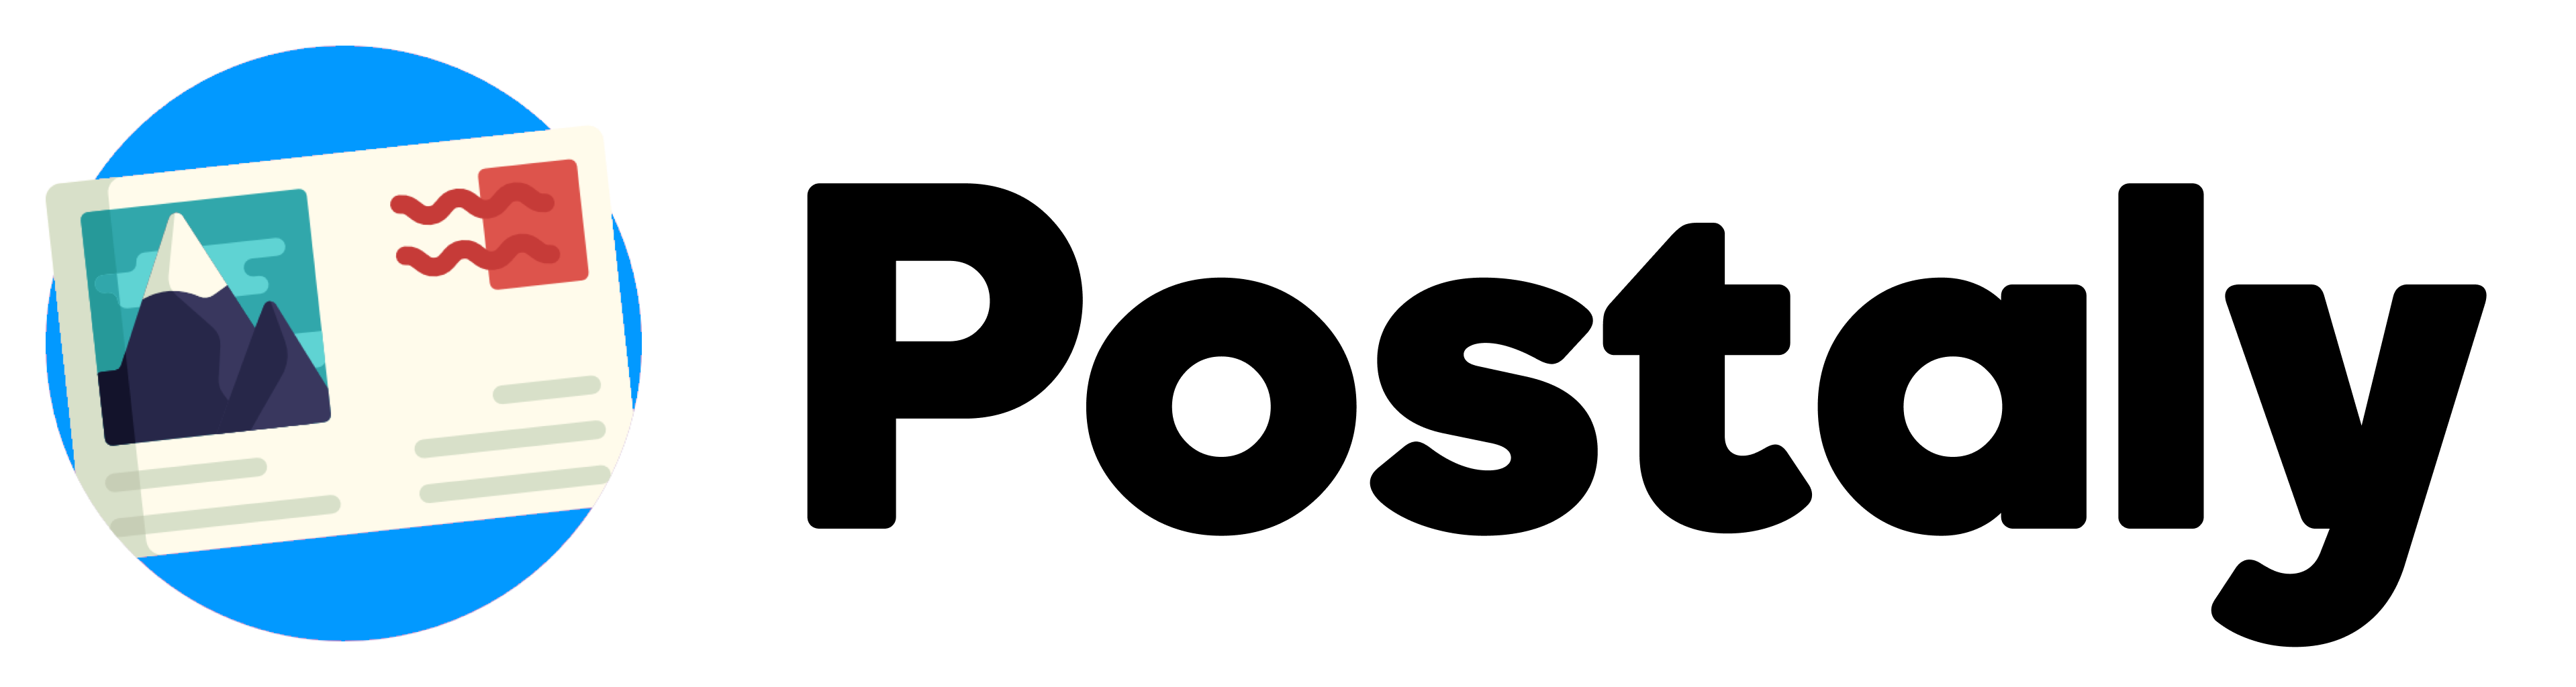 Postaly Logo Noir